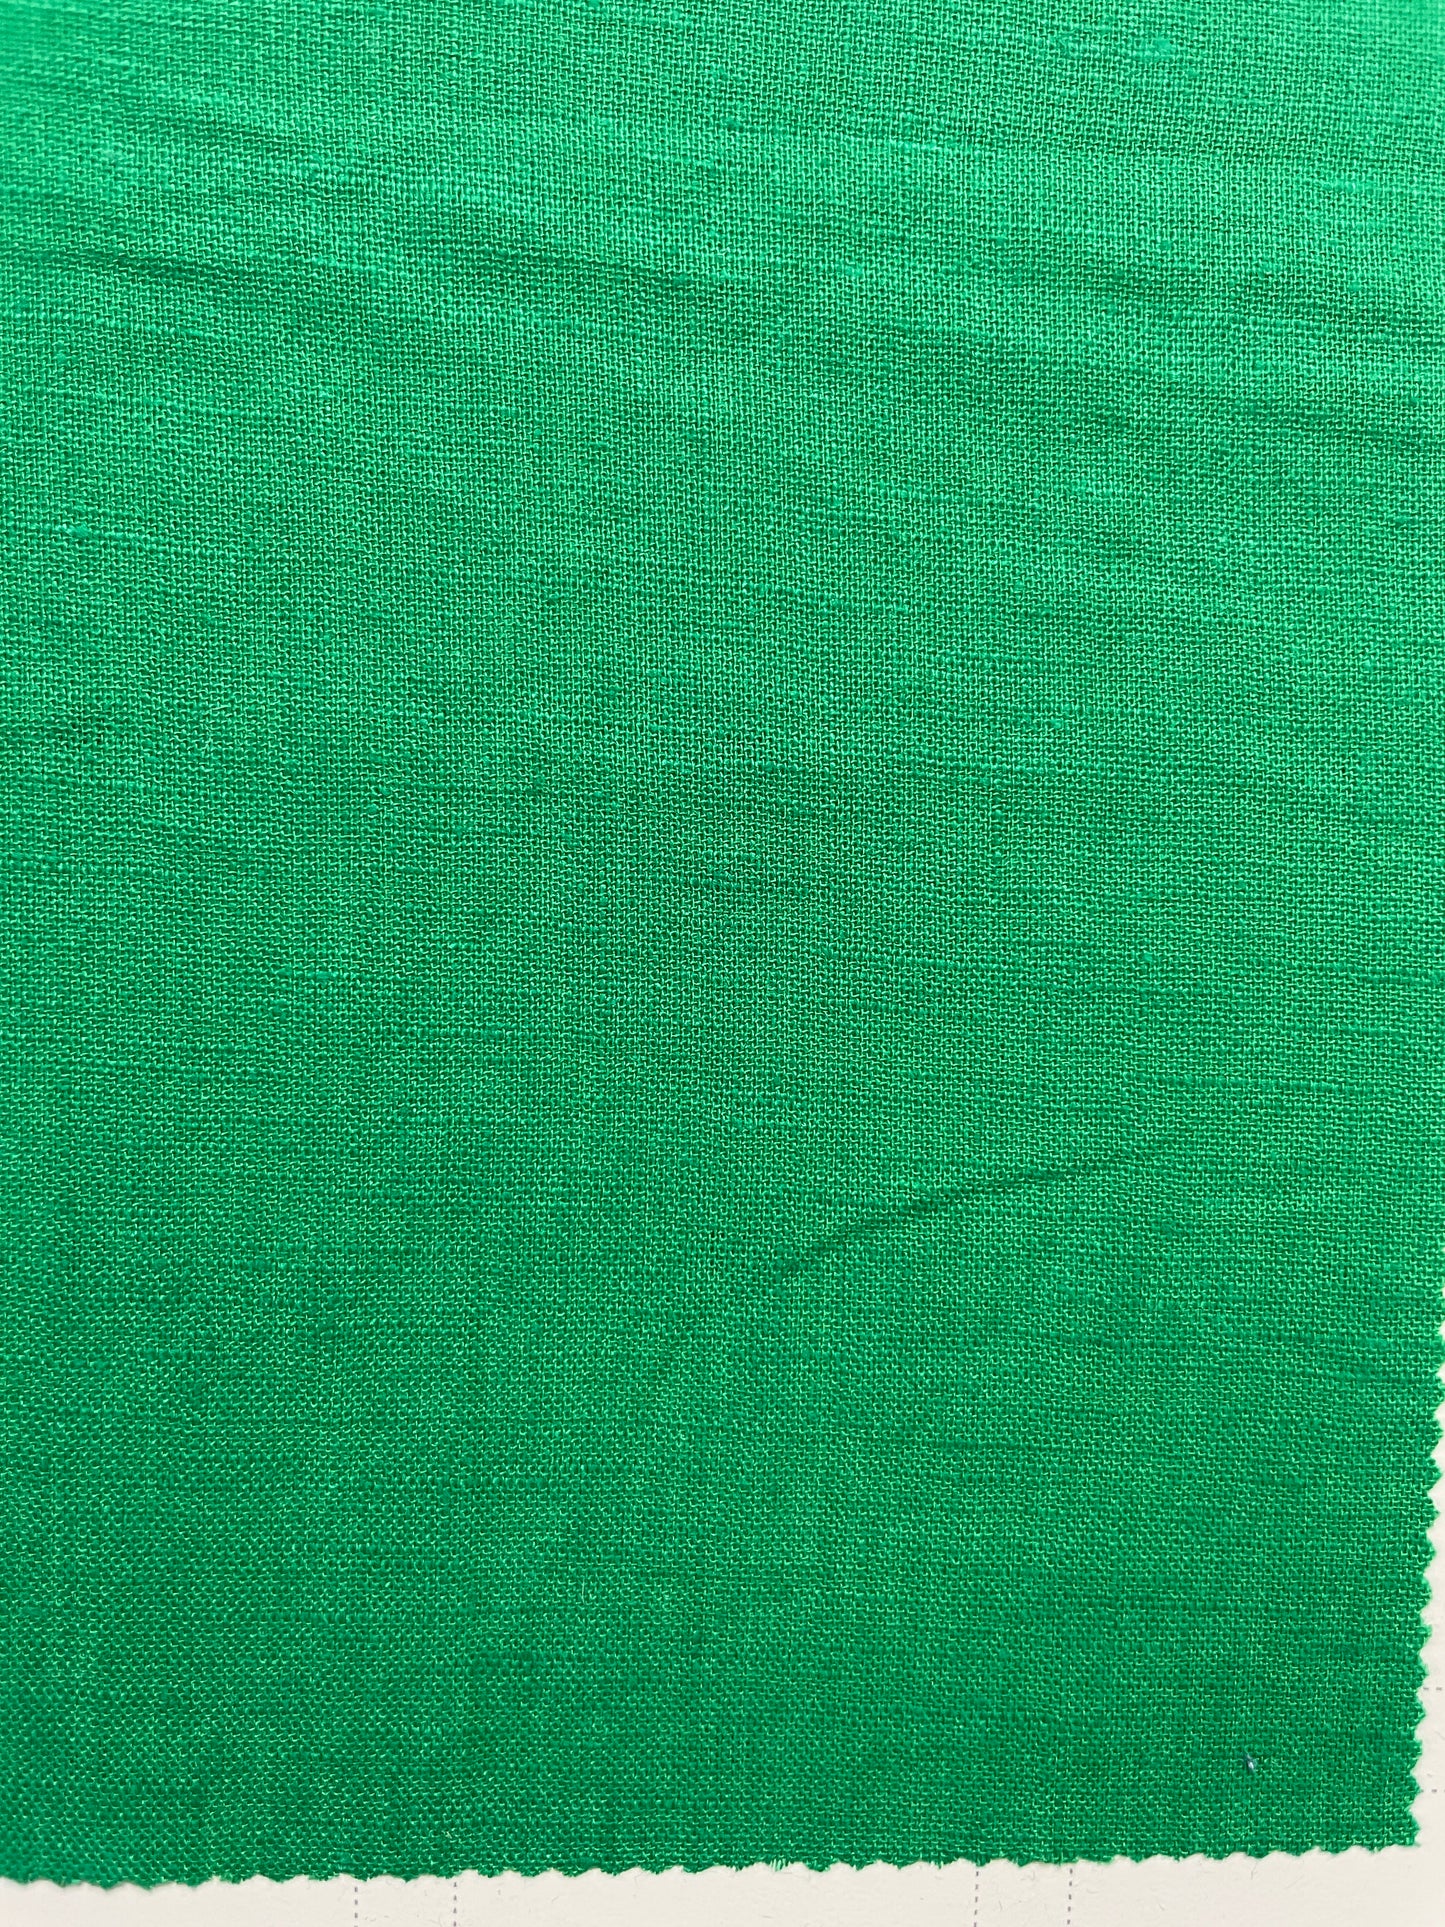 150g Linen Cotton Blended Fabric - Natasha Fabric